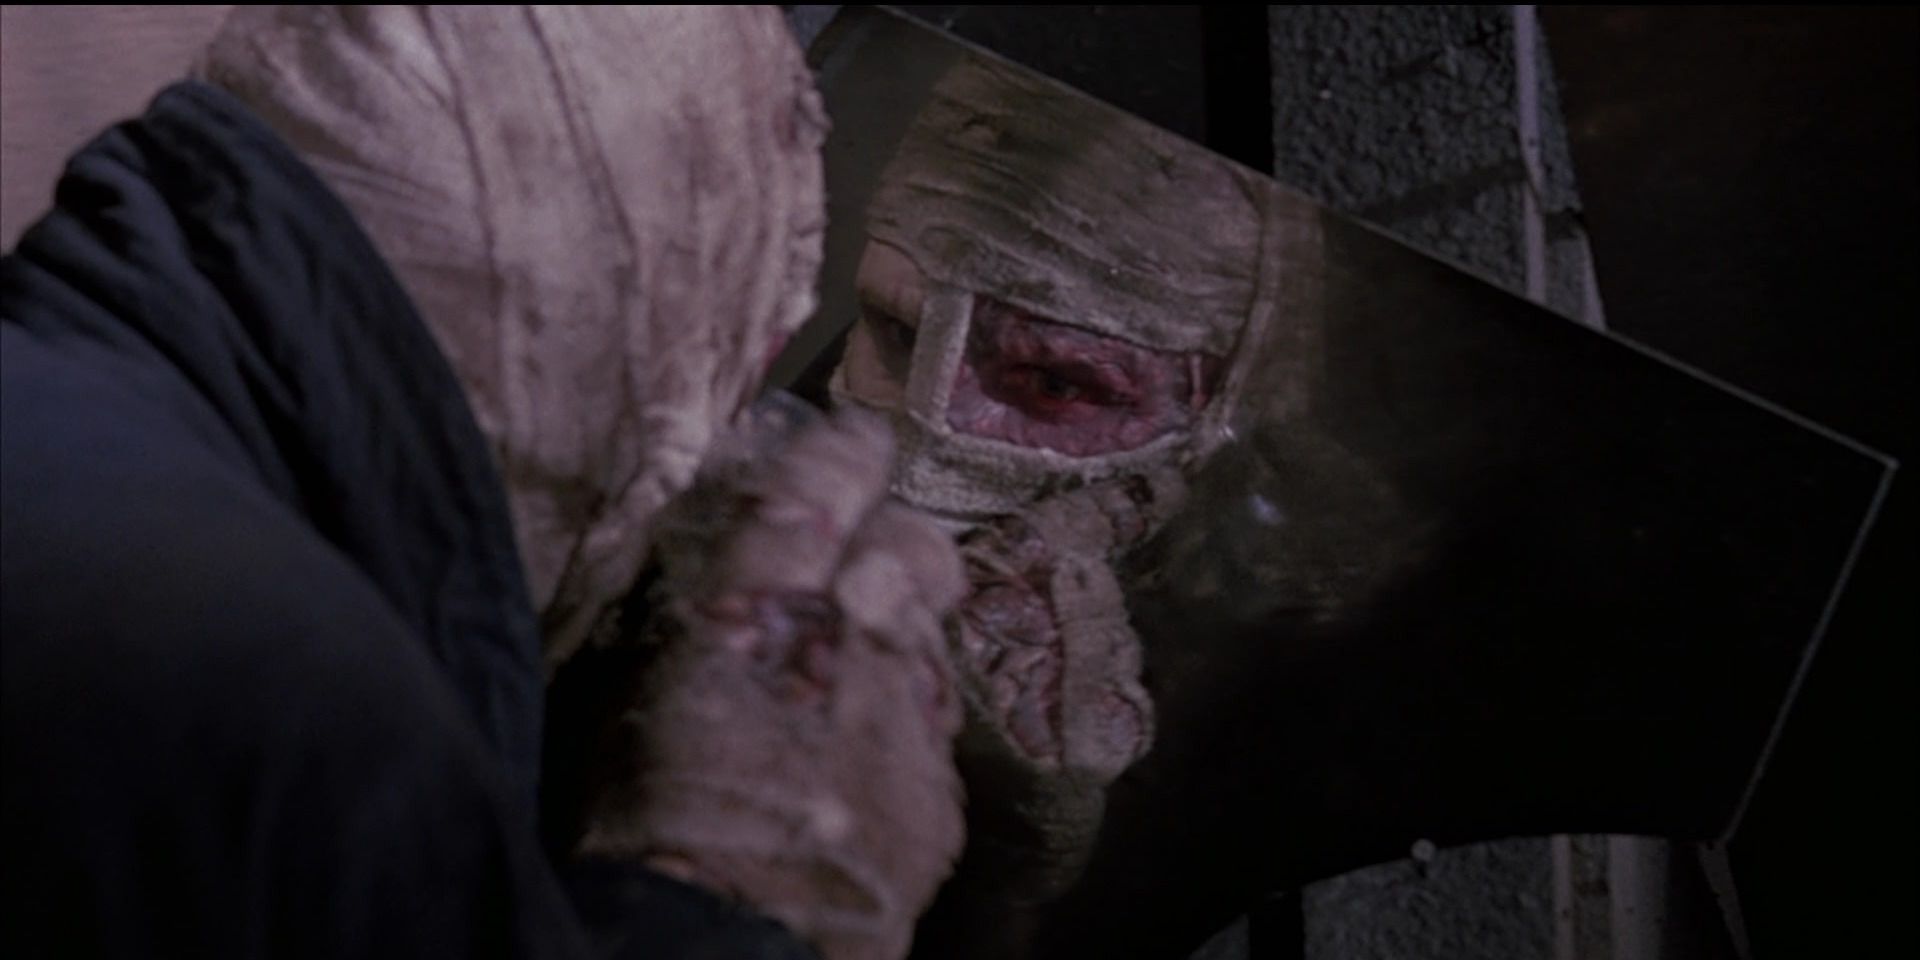 Liam Neeson sees his scarred form in the reflection of broken glass in Sam Raimi's Darkman